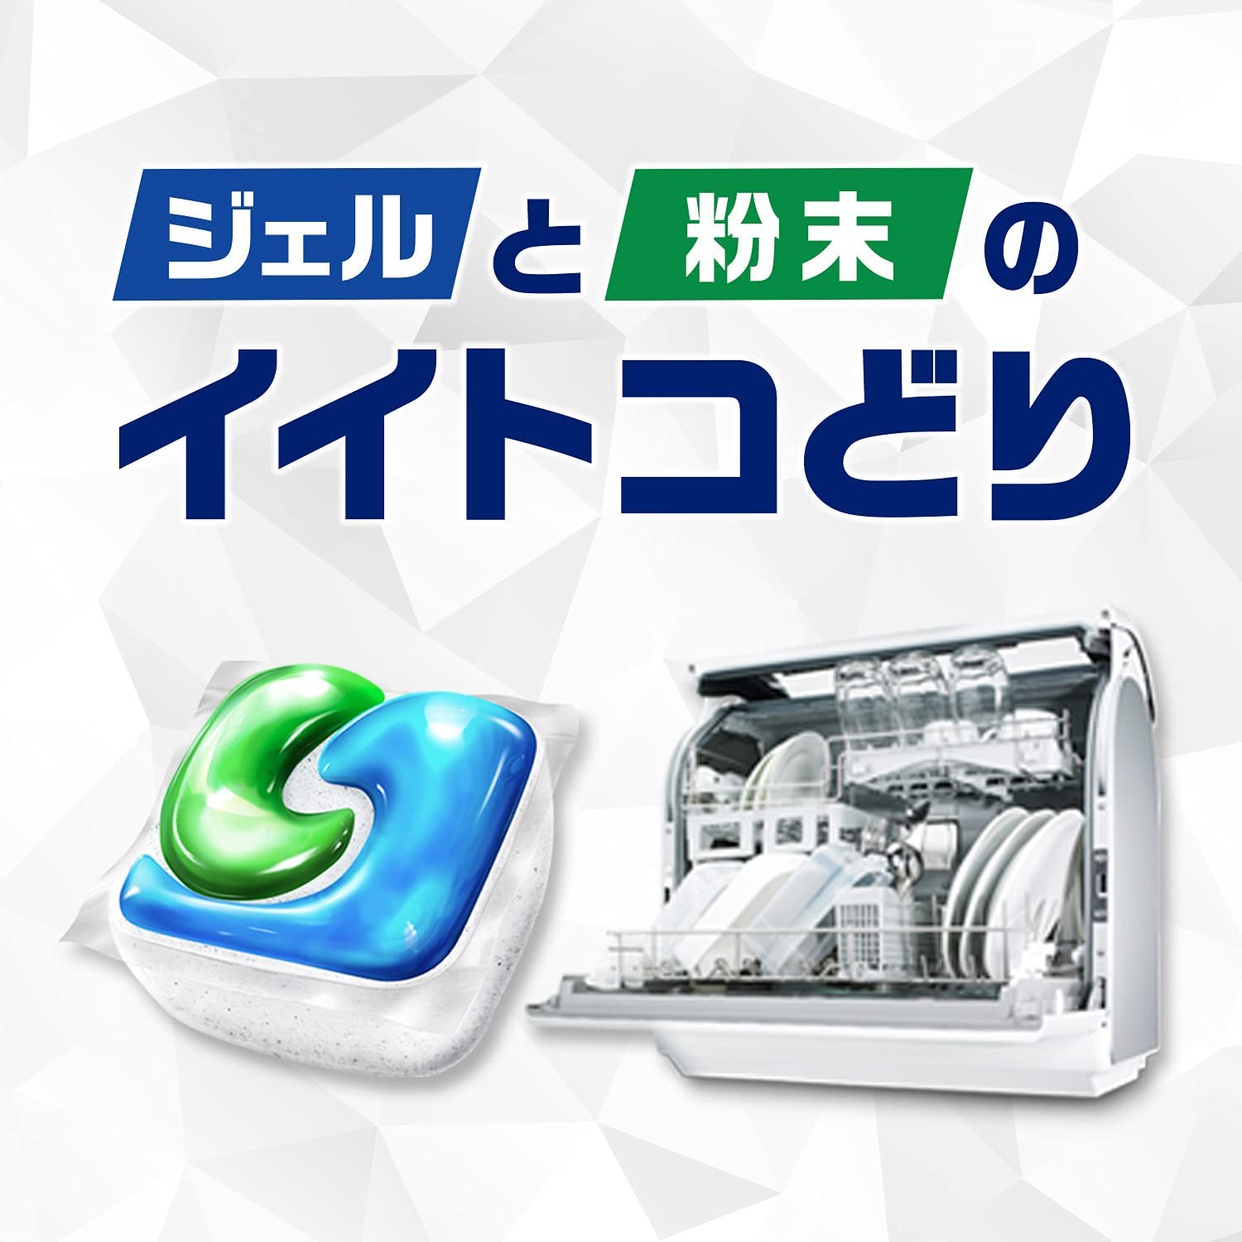 JOY(ジョイ) ジェルタブ 食洗機用洗剤の商品画像サムネ3 